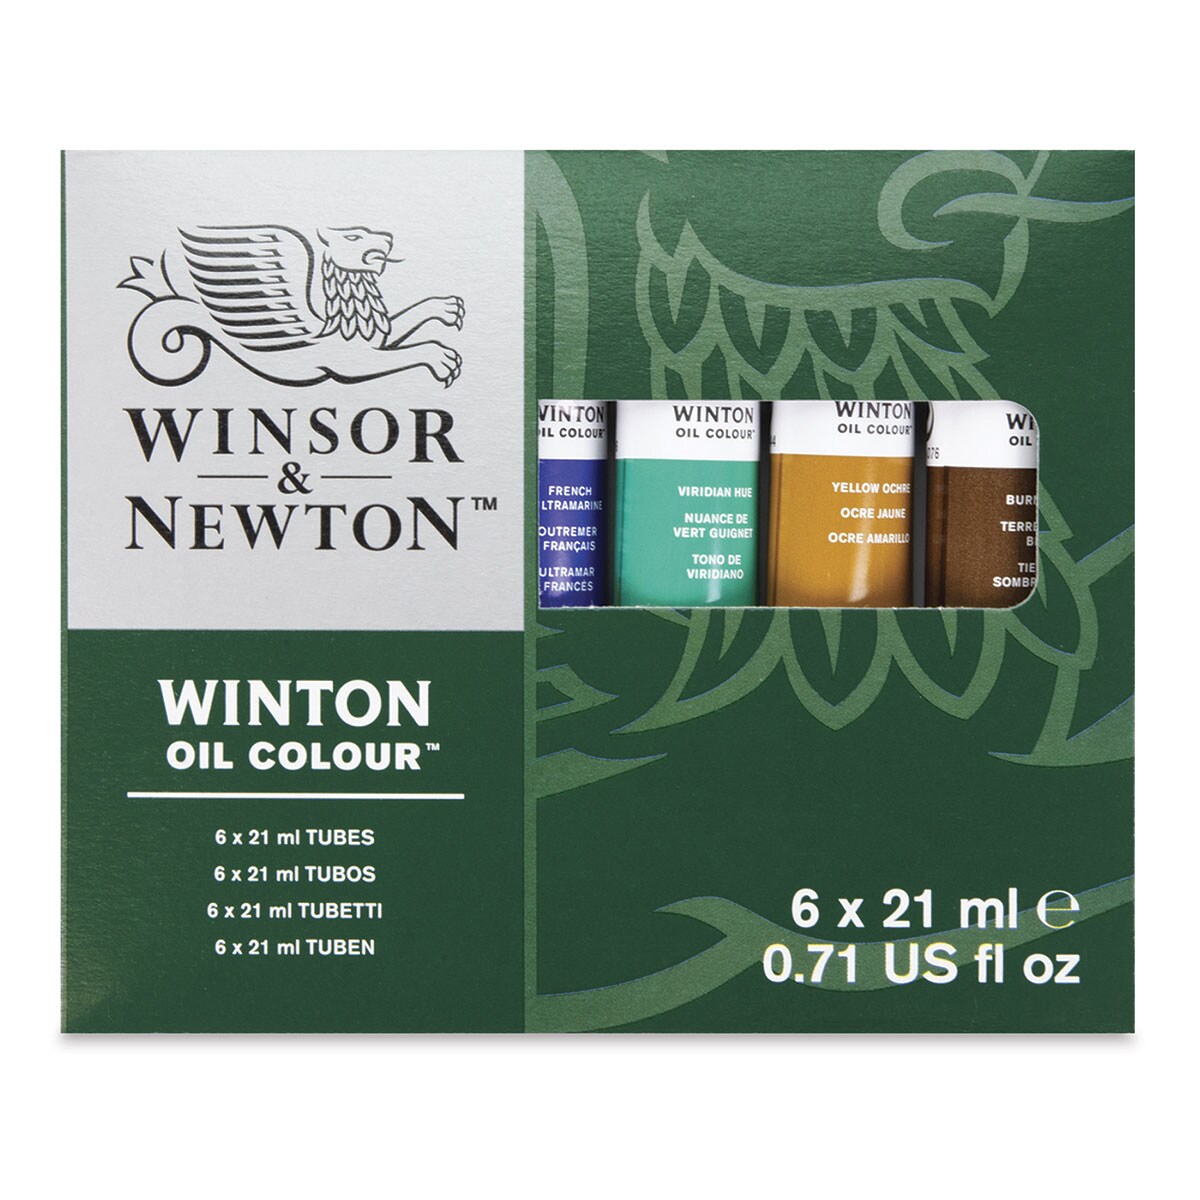 Winsor &#x26; Newton Winton Oil Colors - Introductory Set, Set of 6 colors, 21 ml tubes